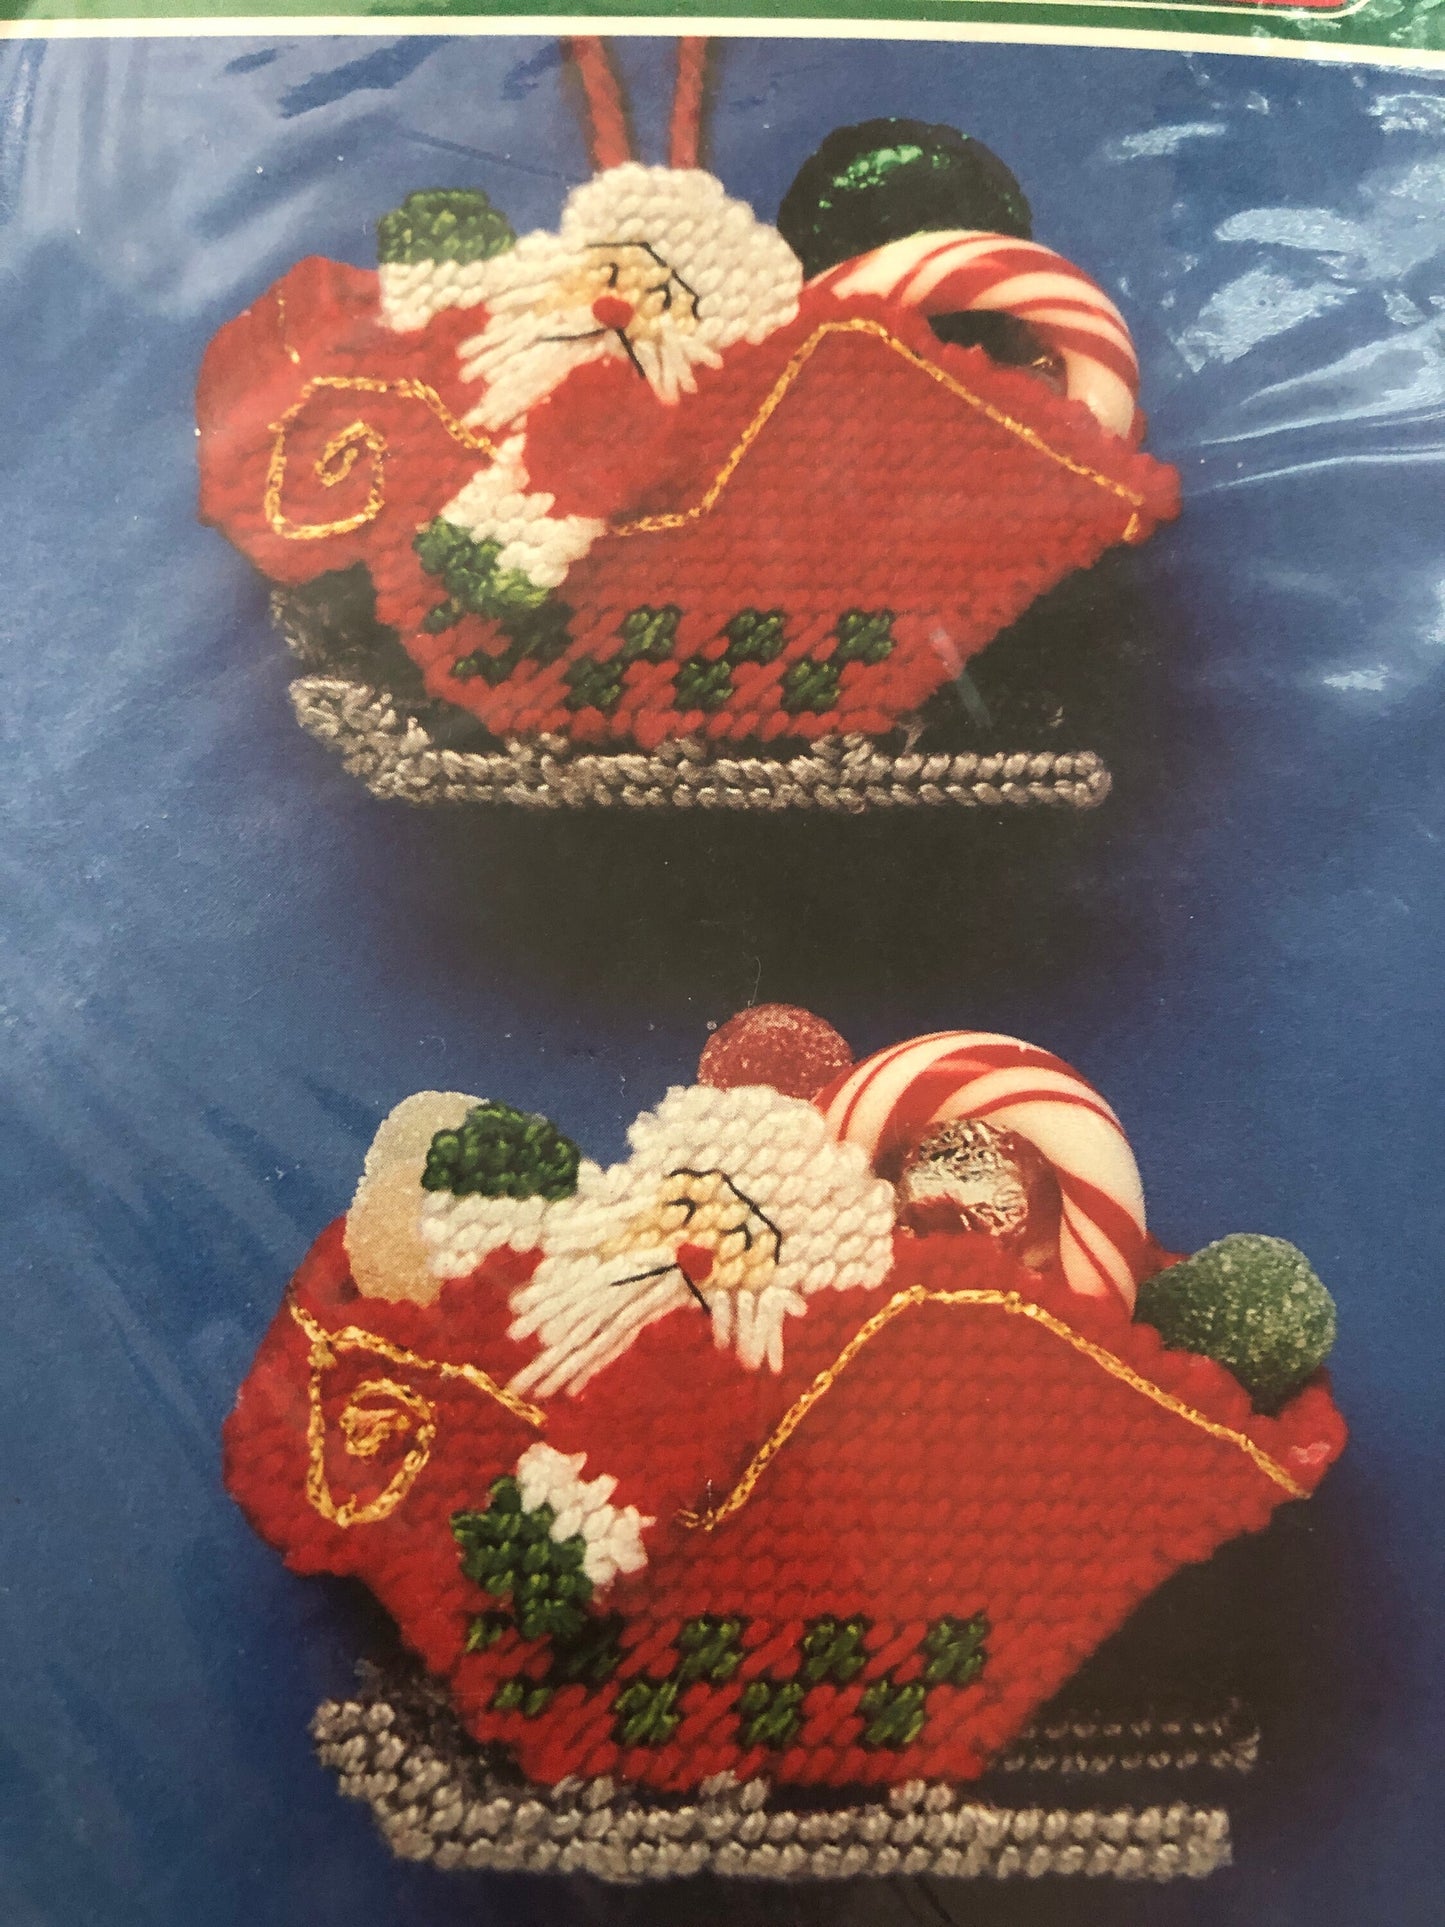 Bernat, Santa's Sleigh, Plastic Canvas, Christmas, Vintage 1993, Ornaments Kit